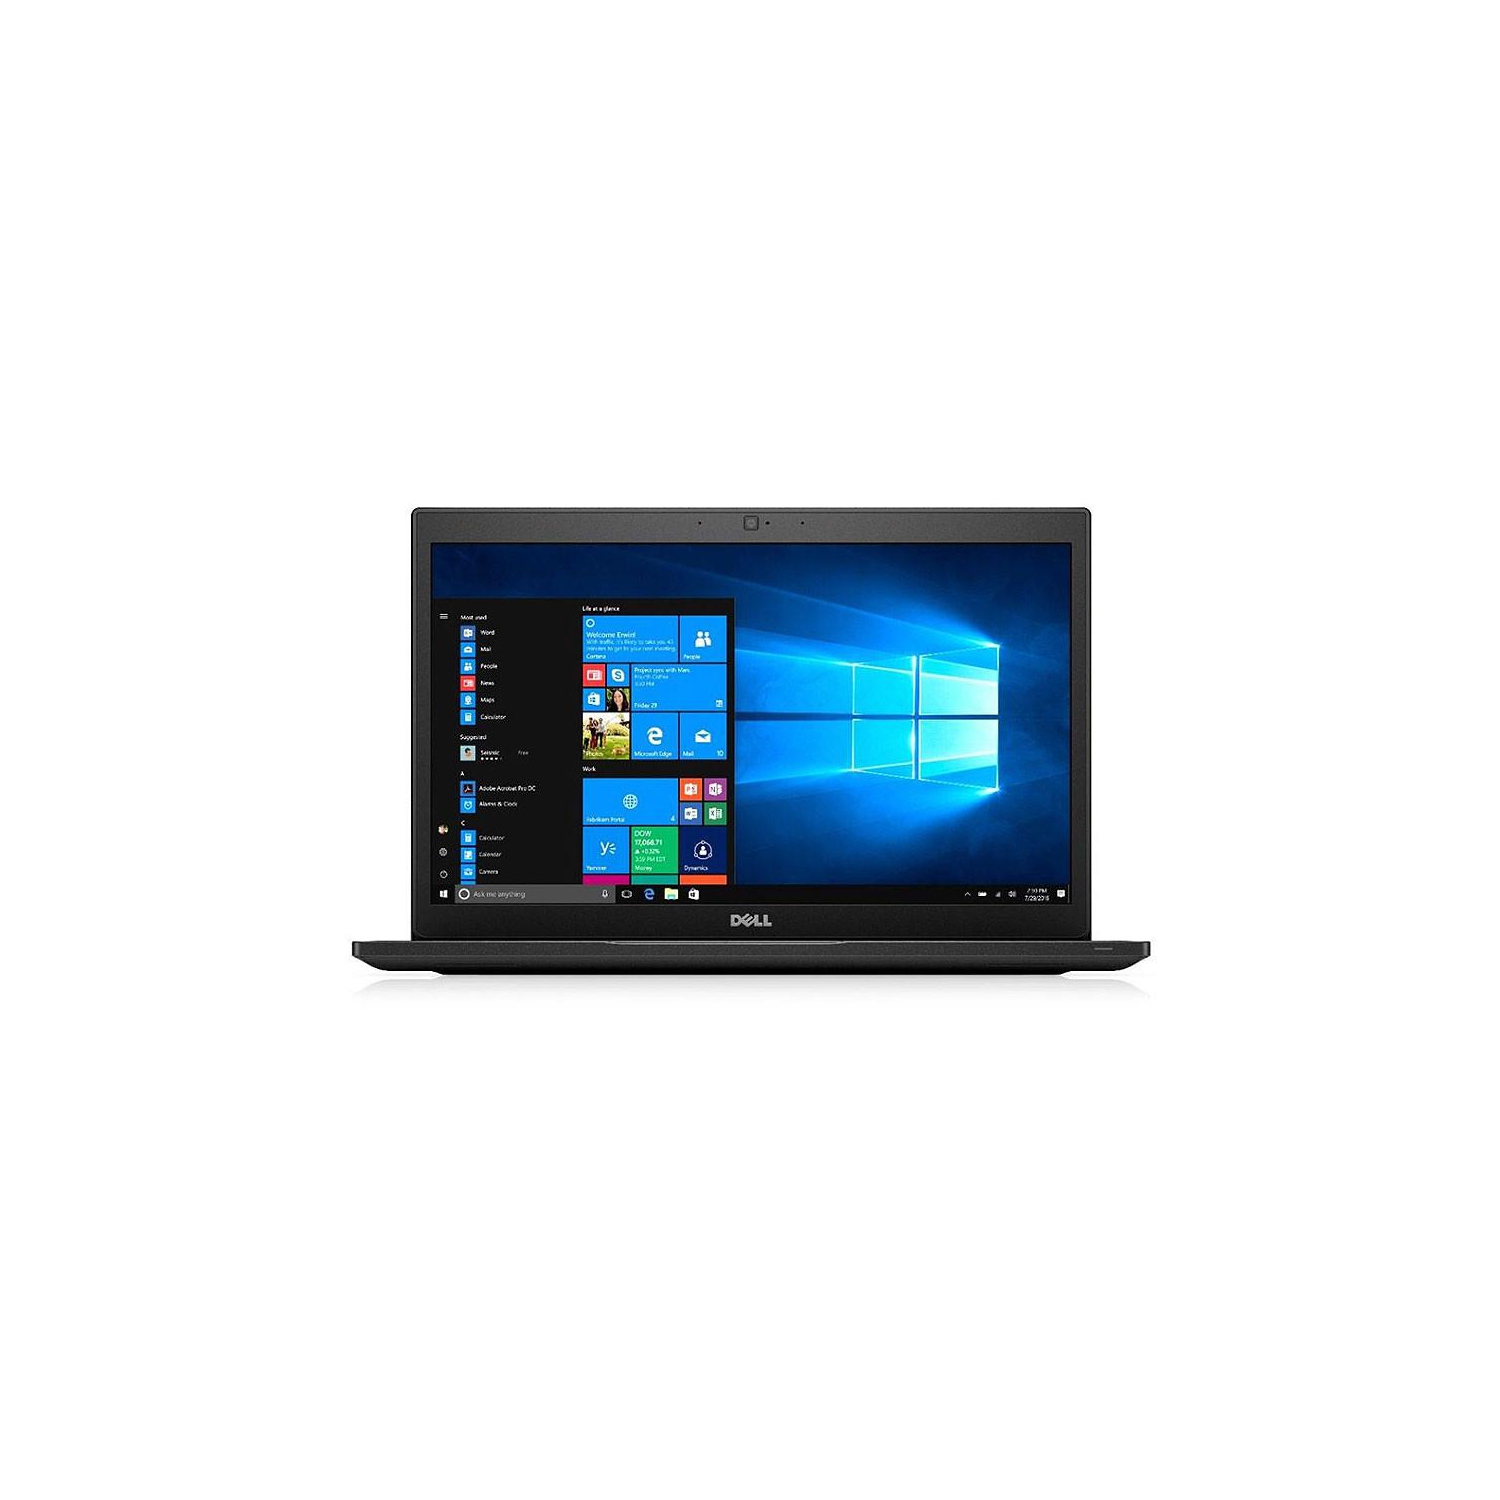 Refurbished (Good) - Dell Latitude 7480 14 inch Touch Screen (1920x1080) Business Laptop: i5-6300U 2.40GHz, 8GB DDR4, 256GB SSD, Webcam, HDMI, Windows 10 Pro 64